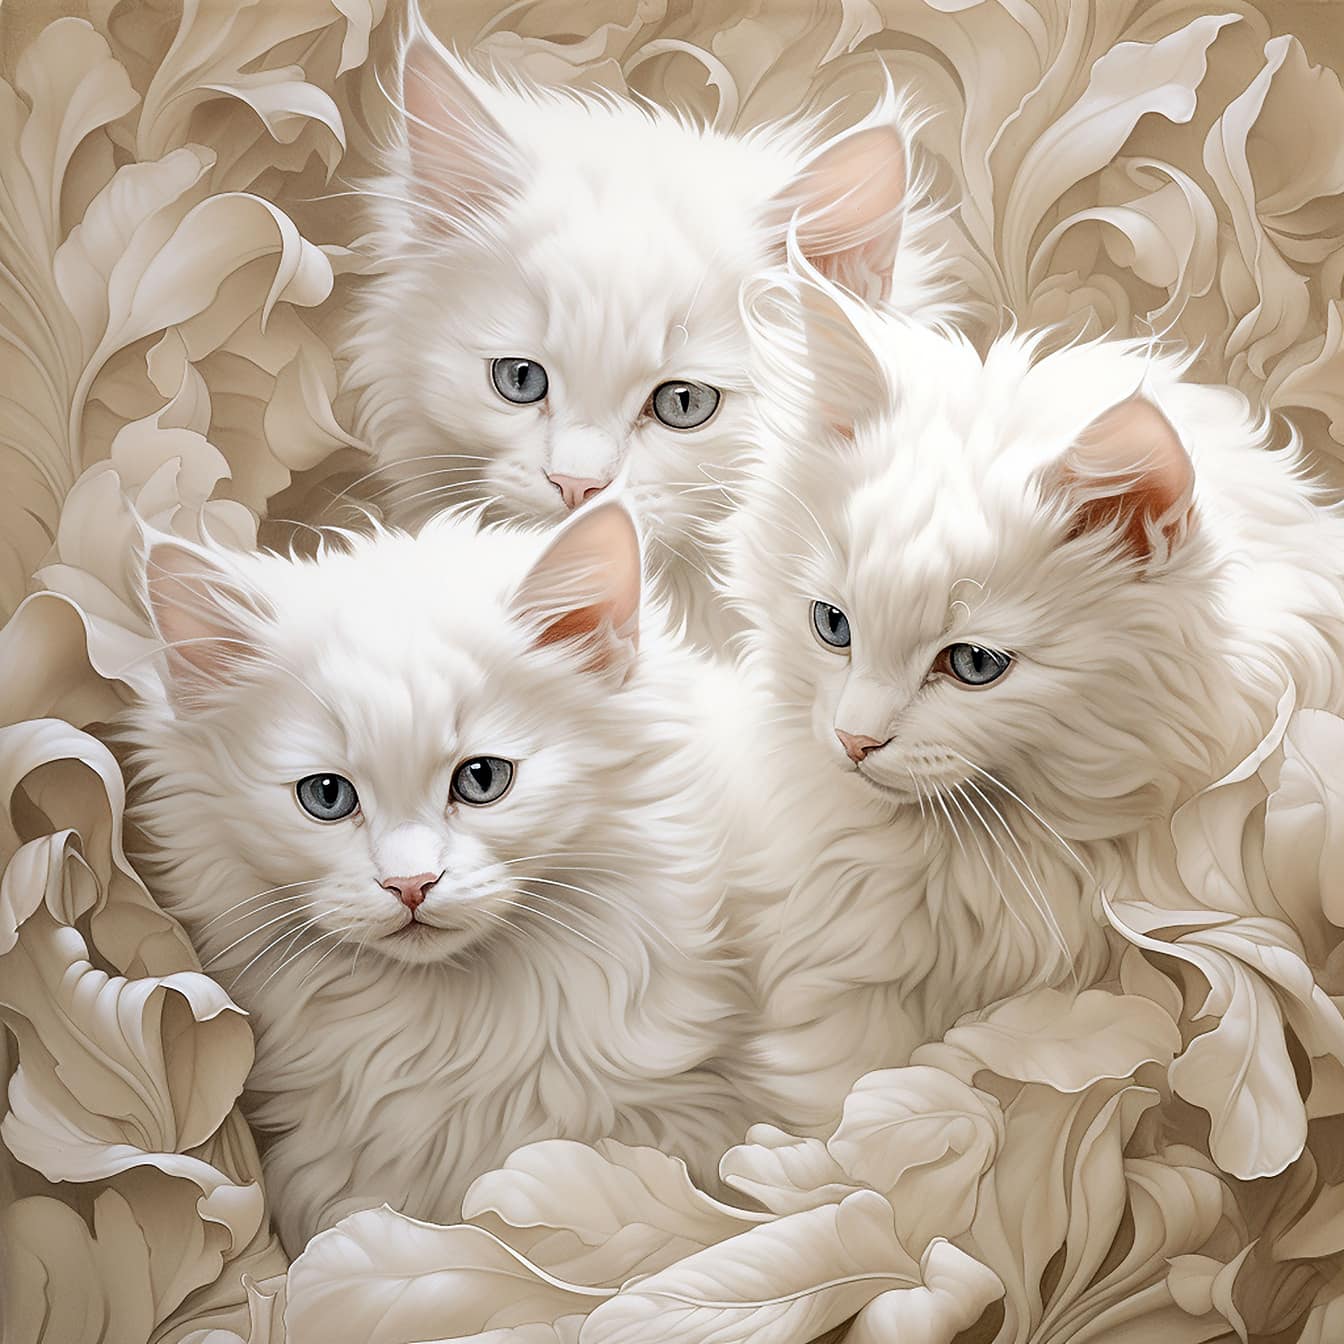 Tiga anak kucing putih berbulu menggemaskan ilustrasi gaya barok